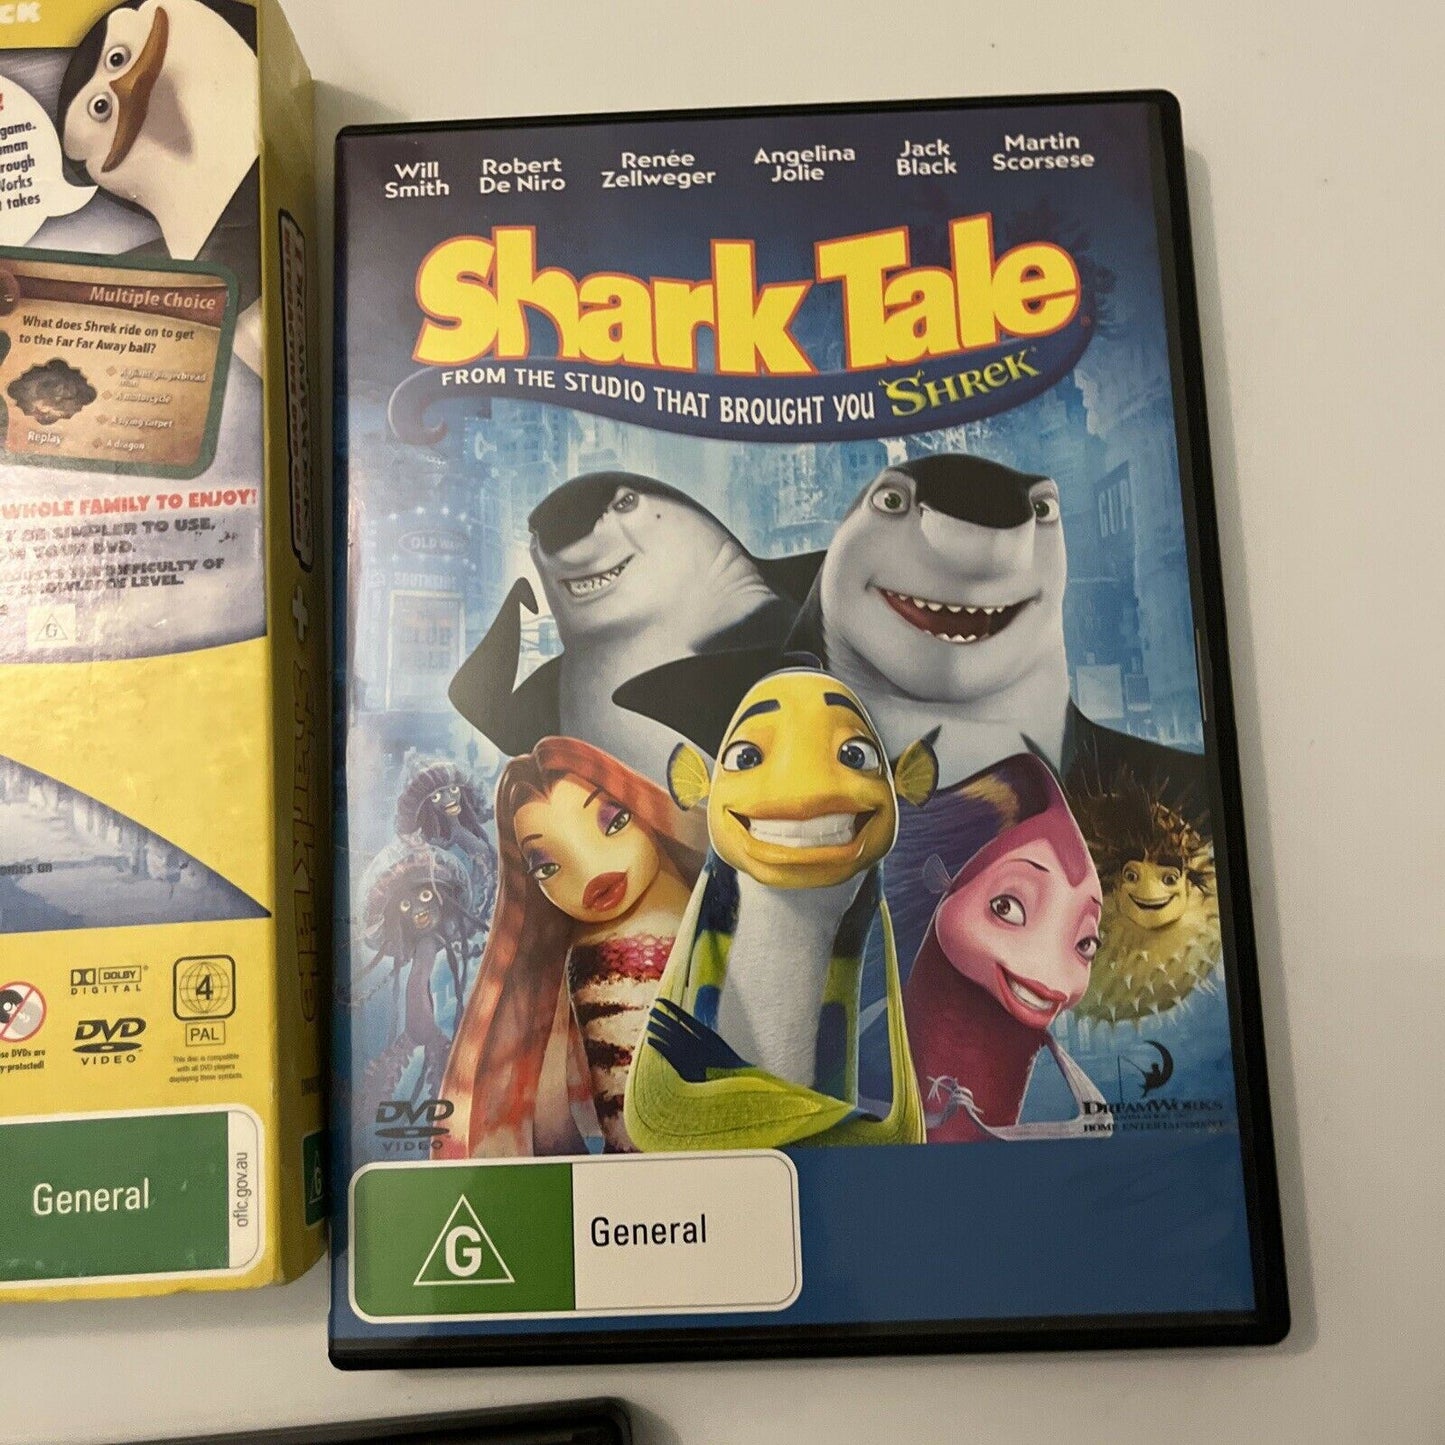 Shark Tale & Dreamworks Interactive DVD Game (DVD, 2004) Region 4